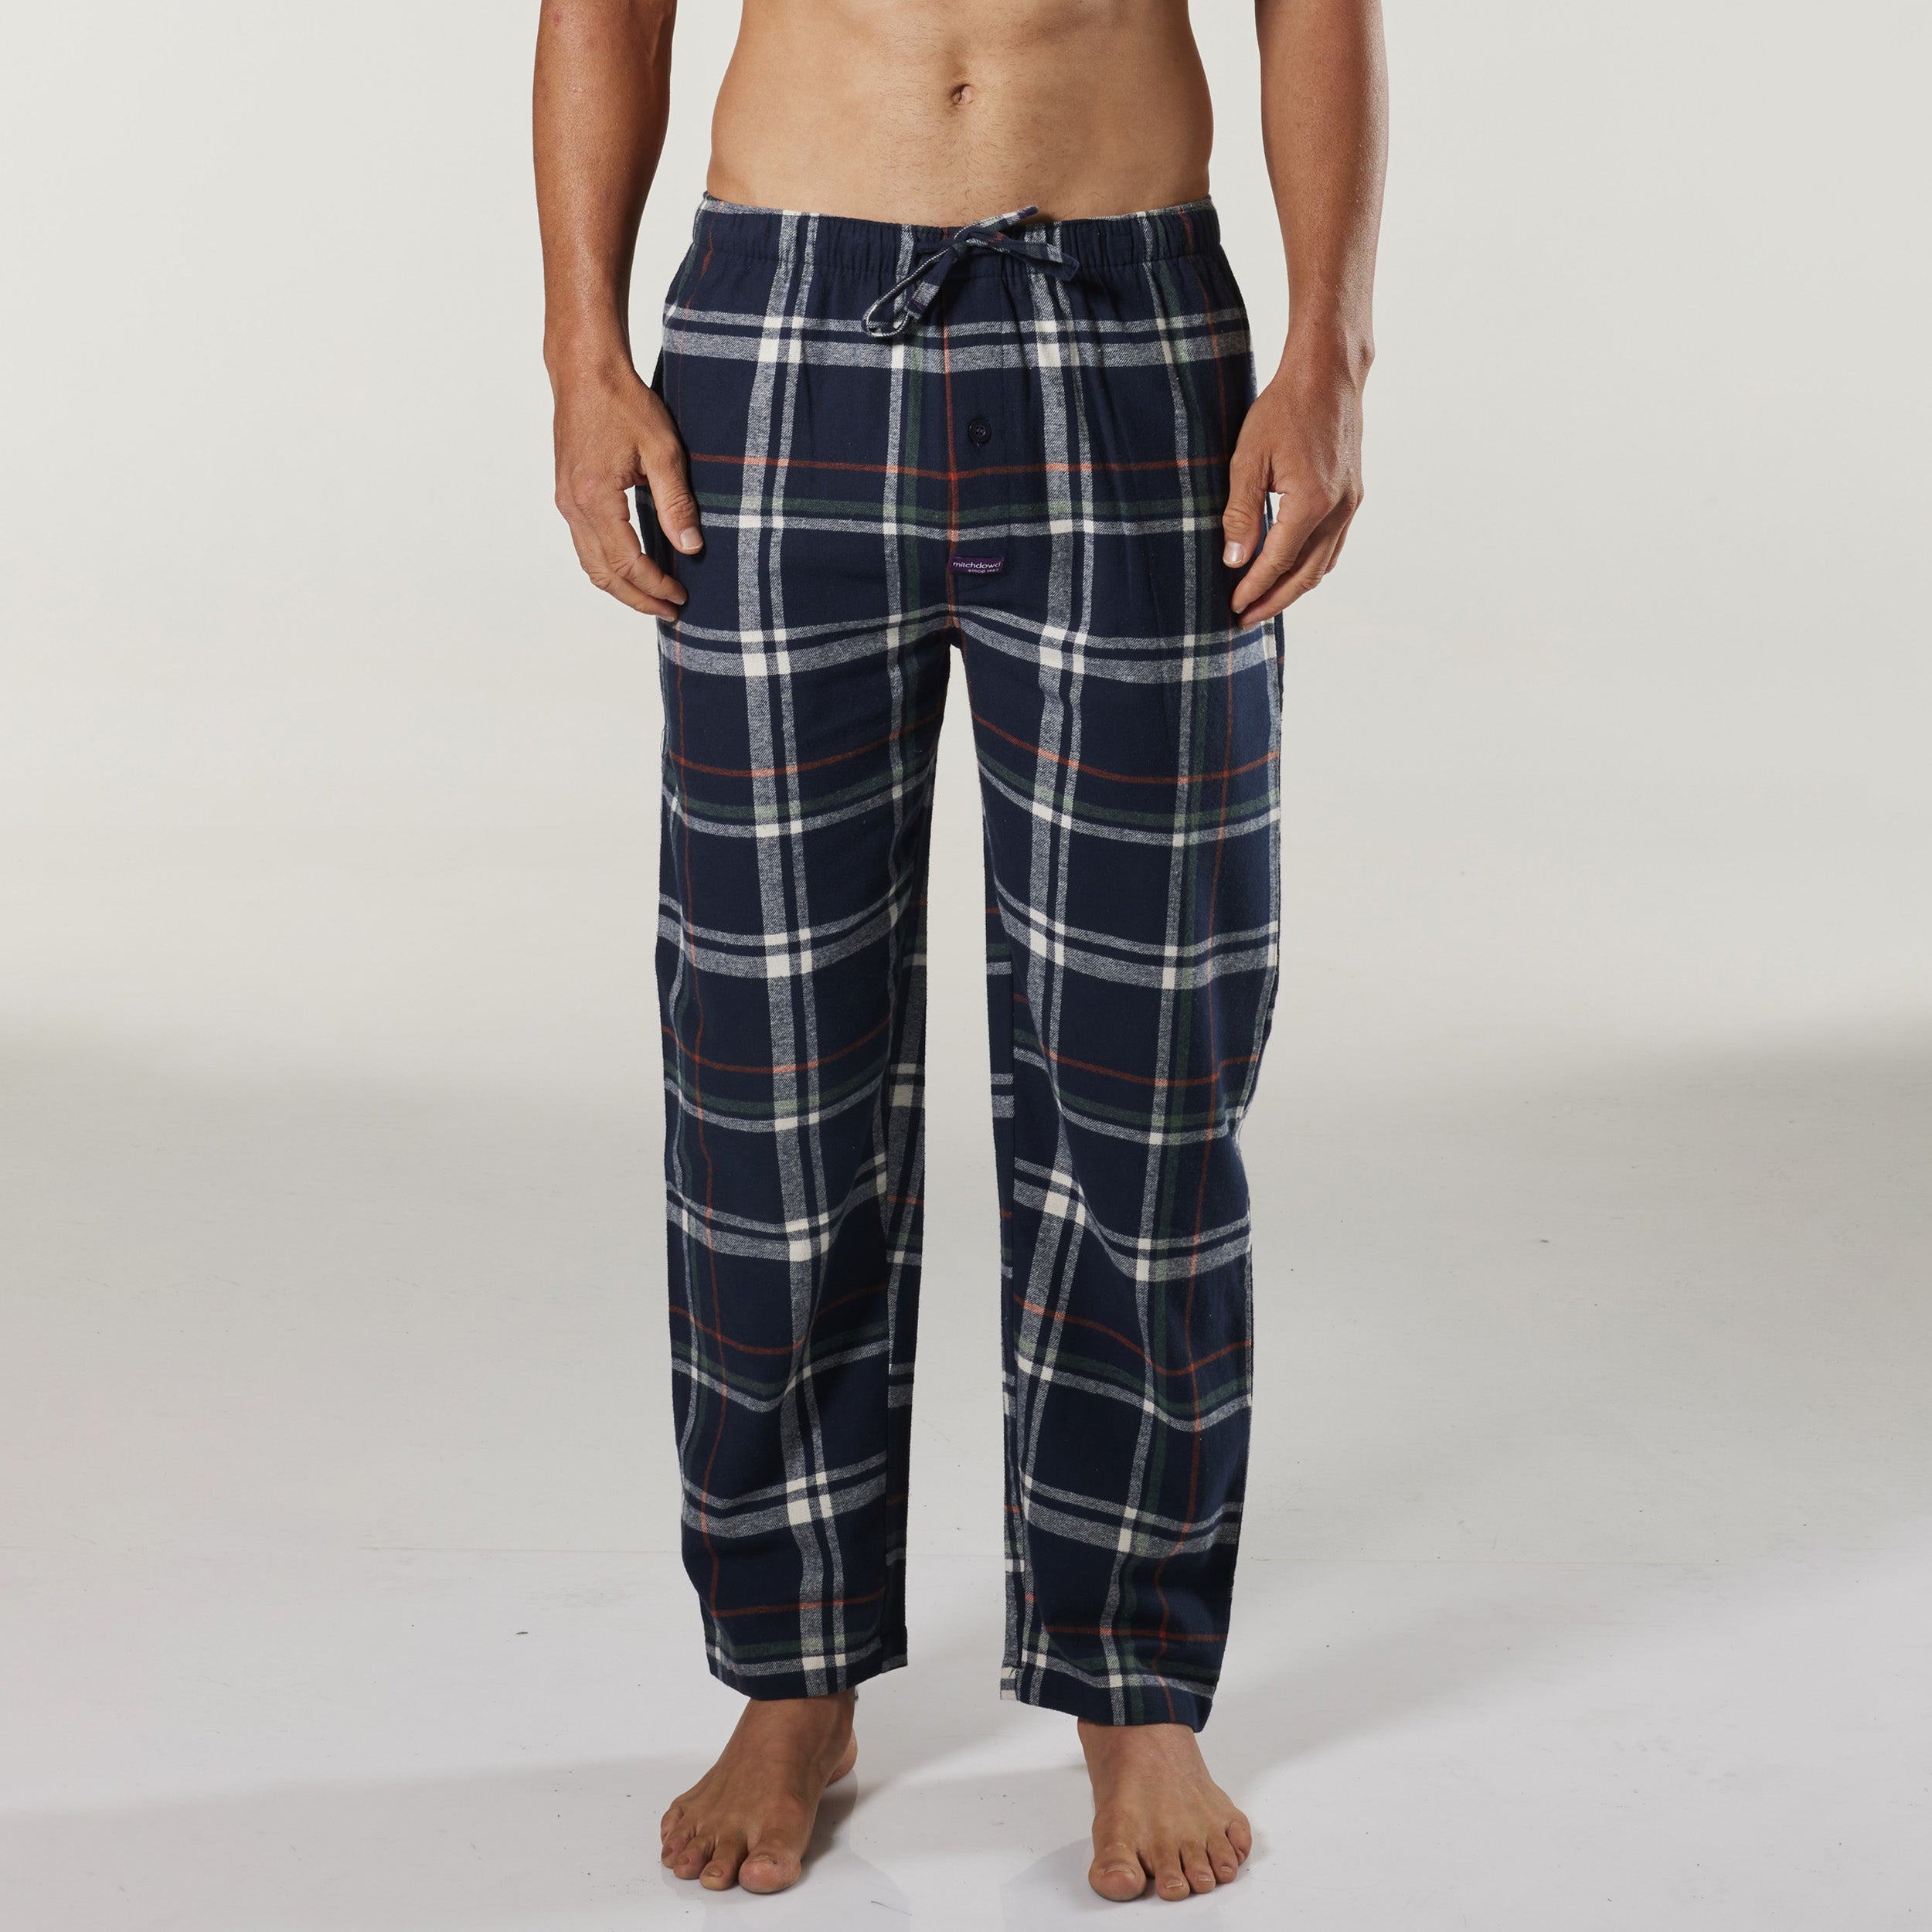 Black Plaid Pajama Bottom | CafePress